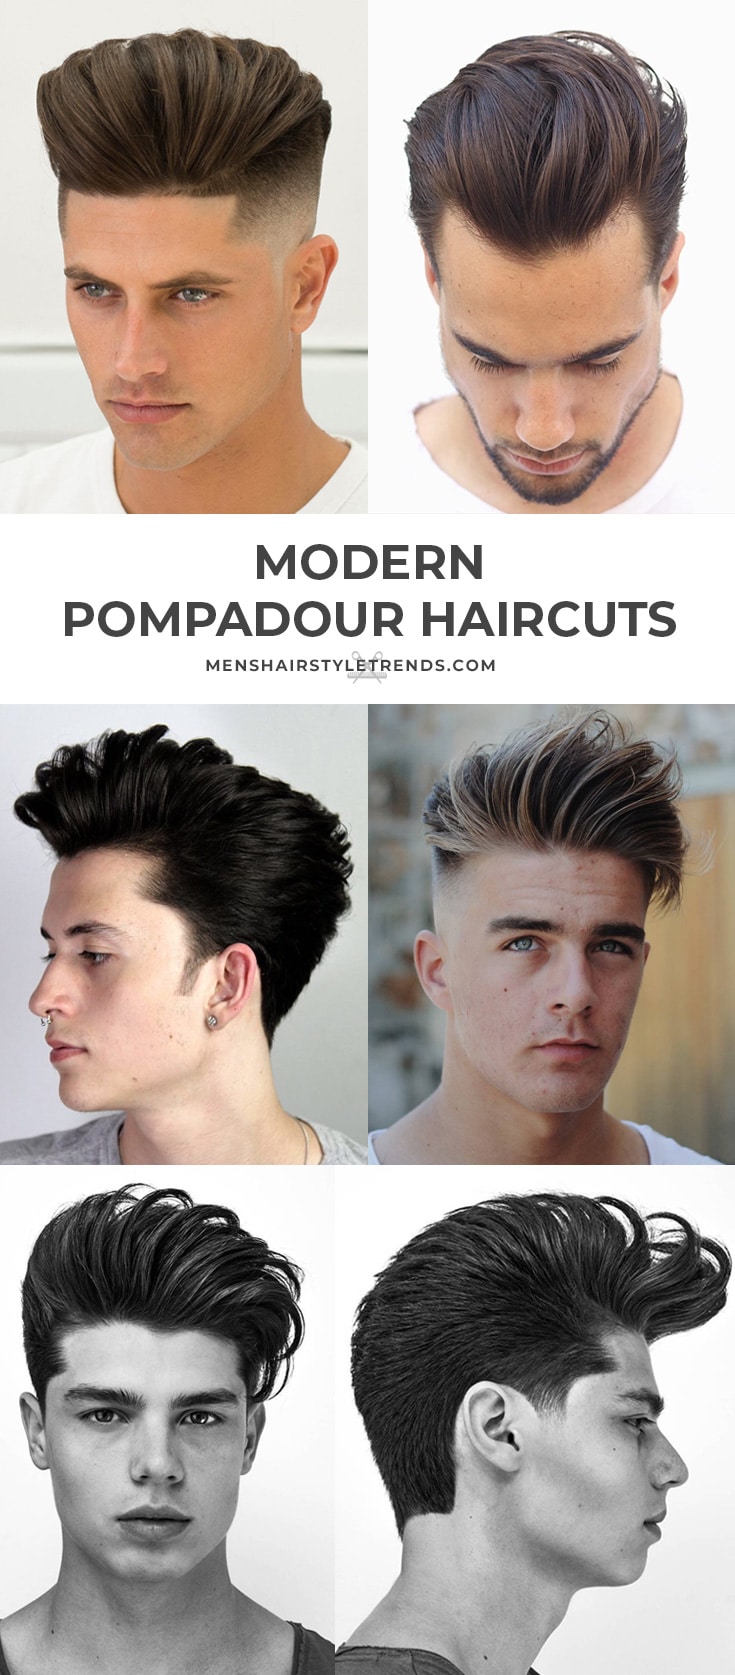 Moderni Pompadour -hiustenleikkaus + kampaus miehille